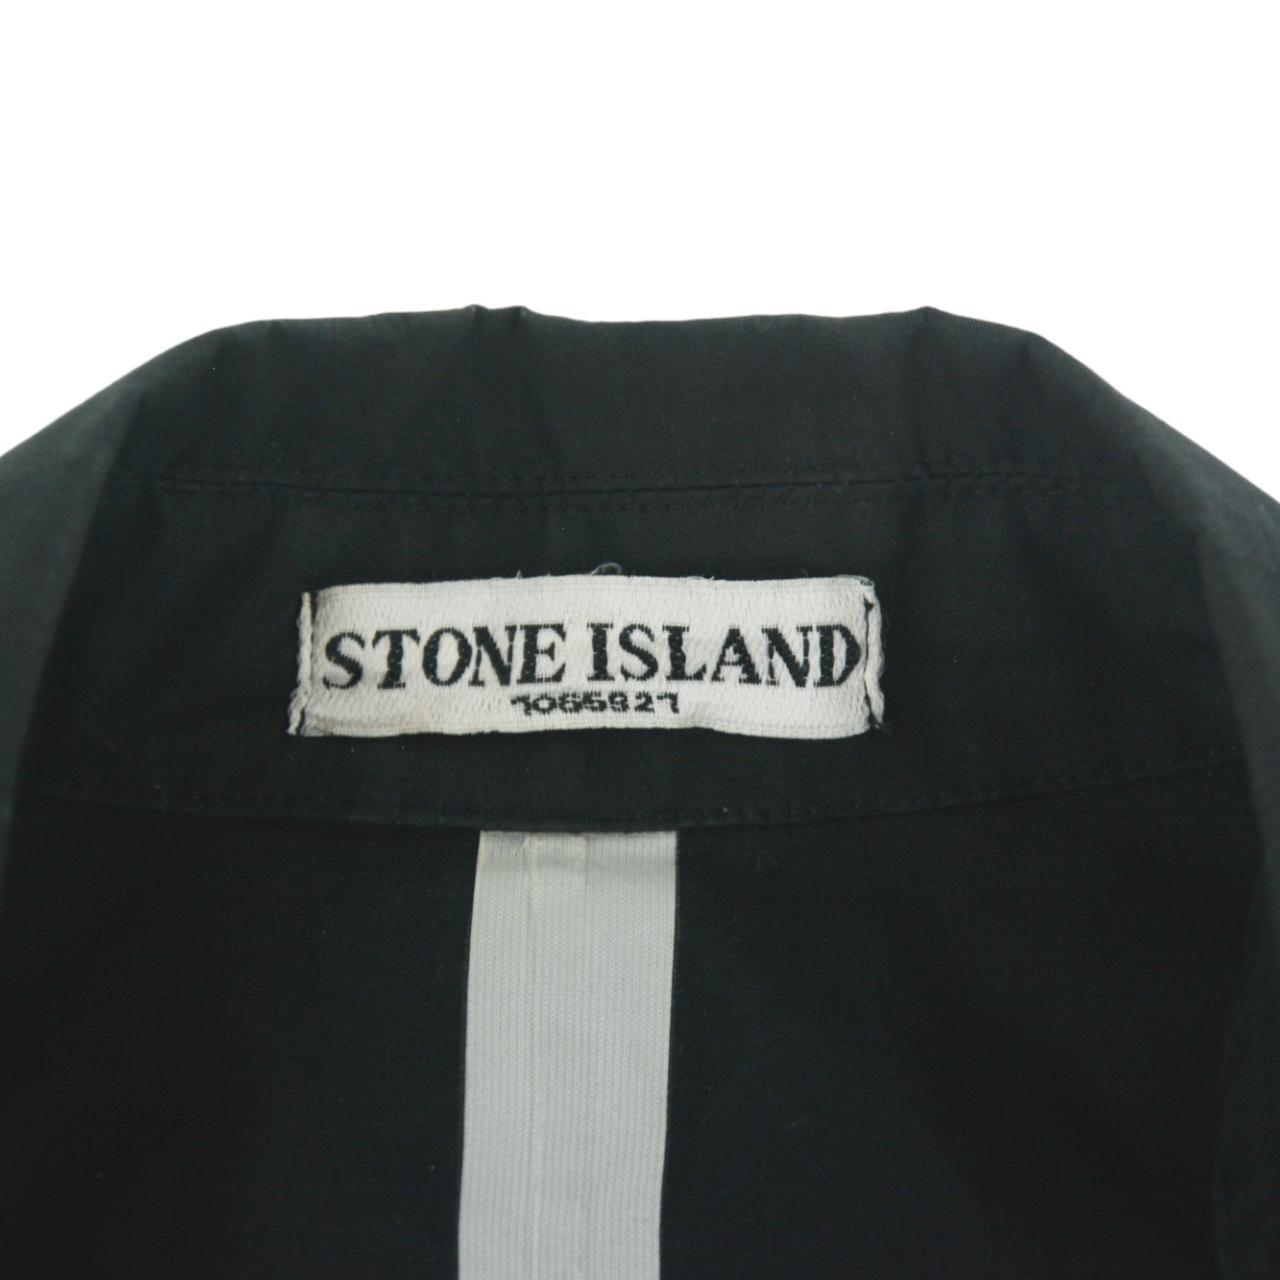 Vintage Stone Island Ventile Jacket Size S - Known Source